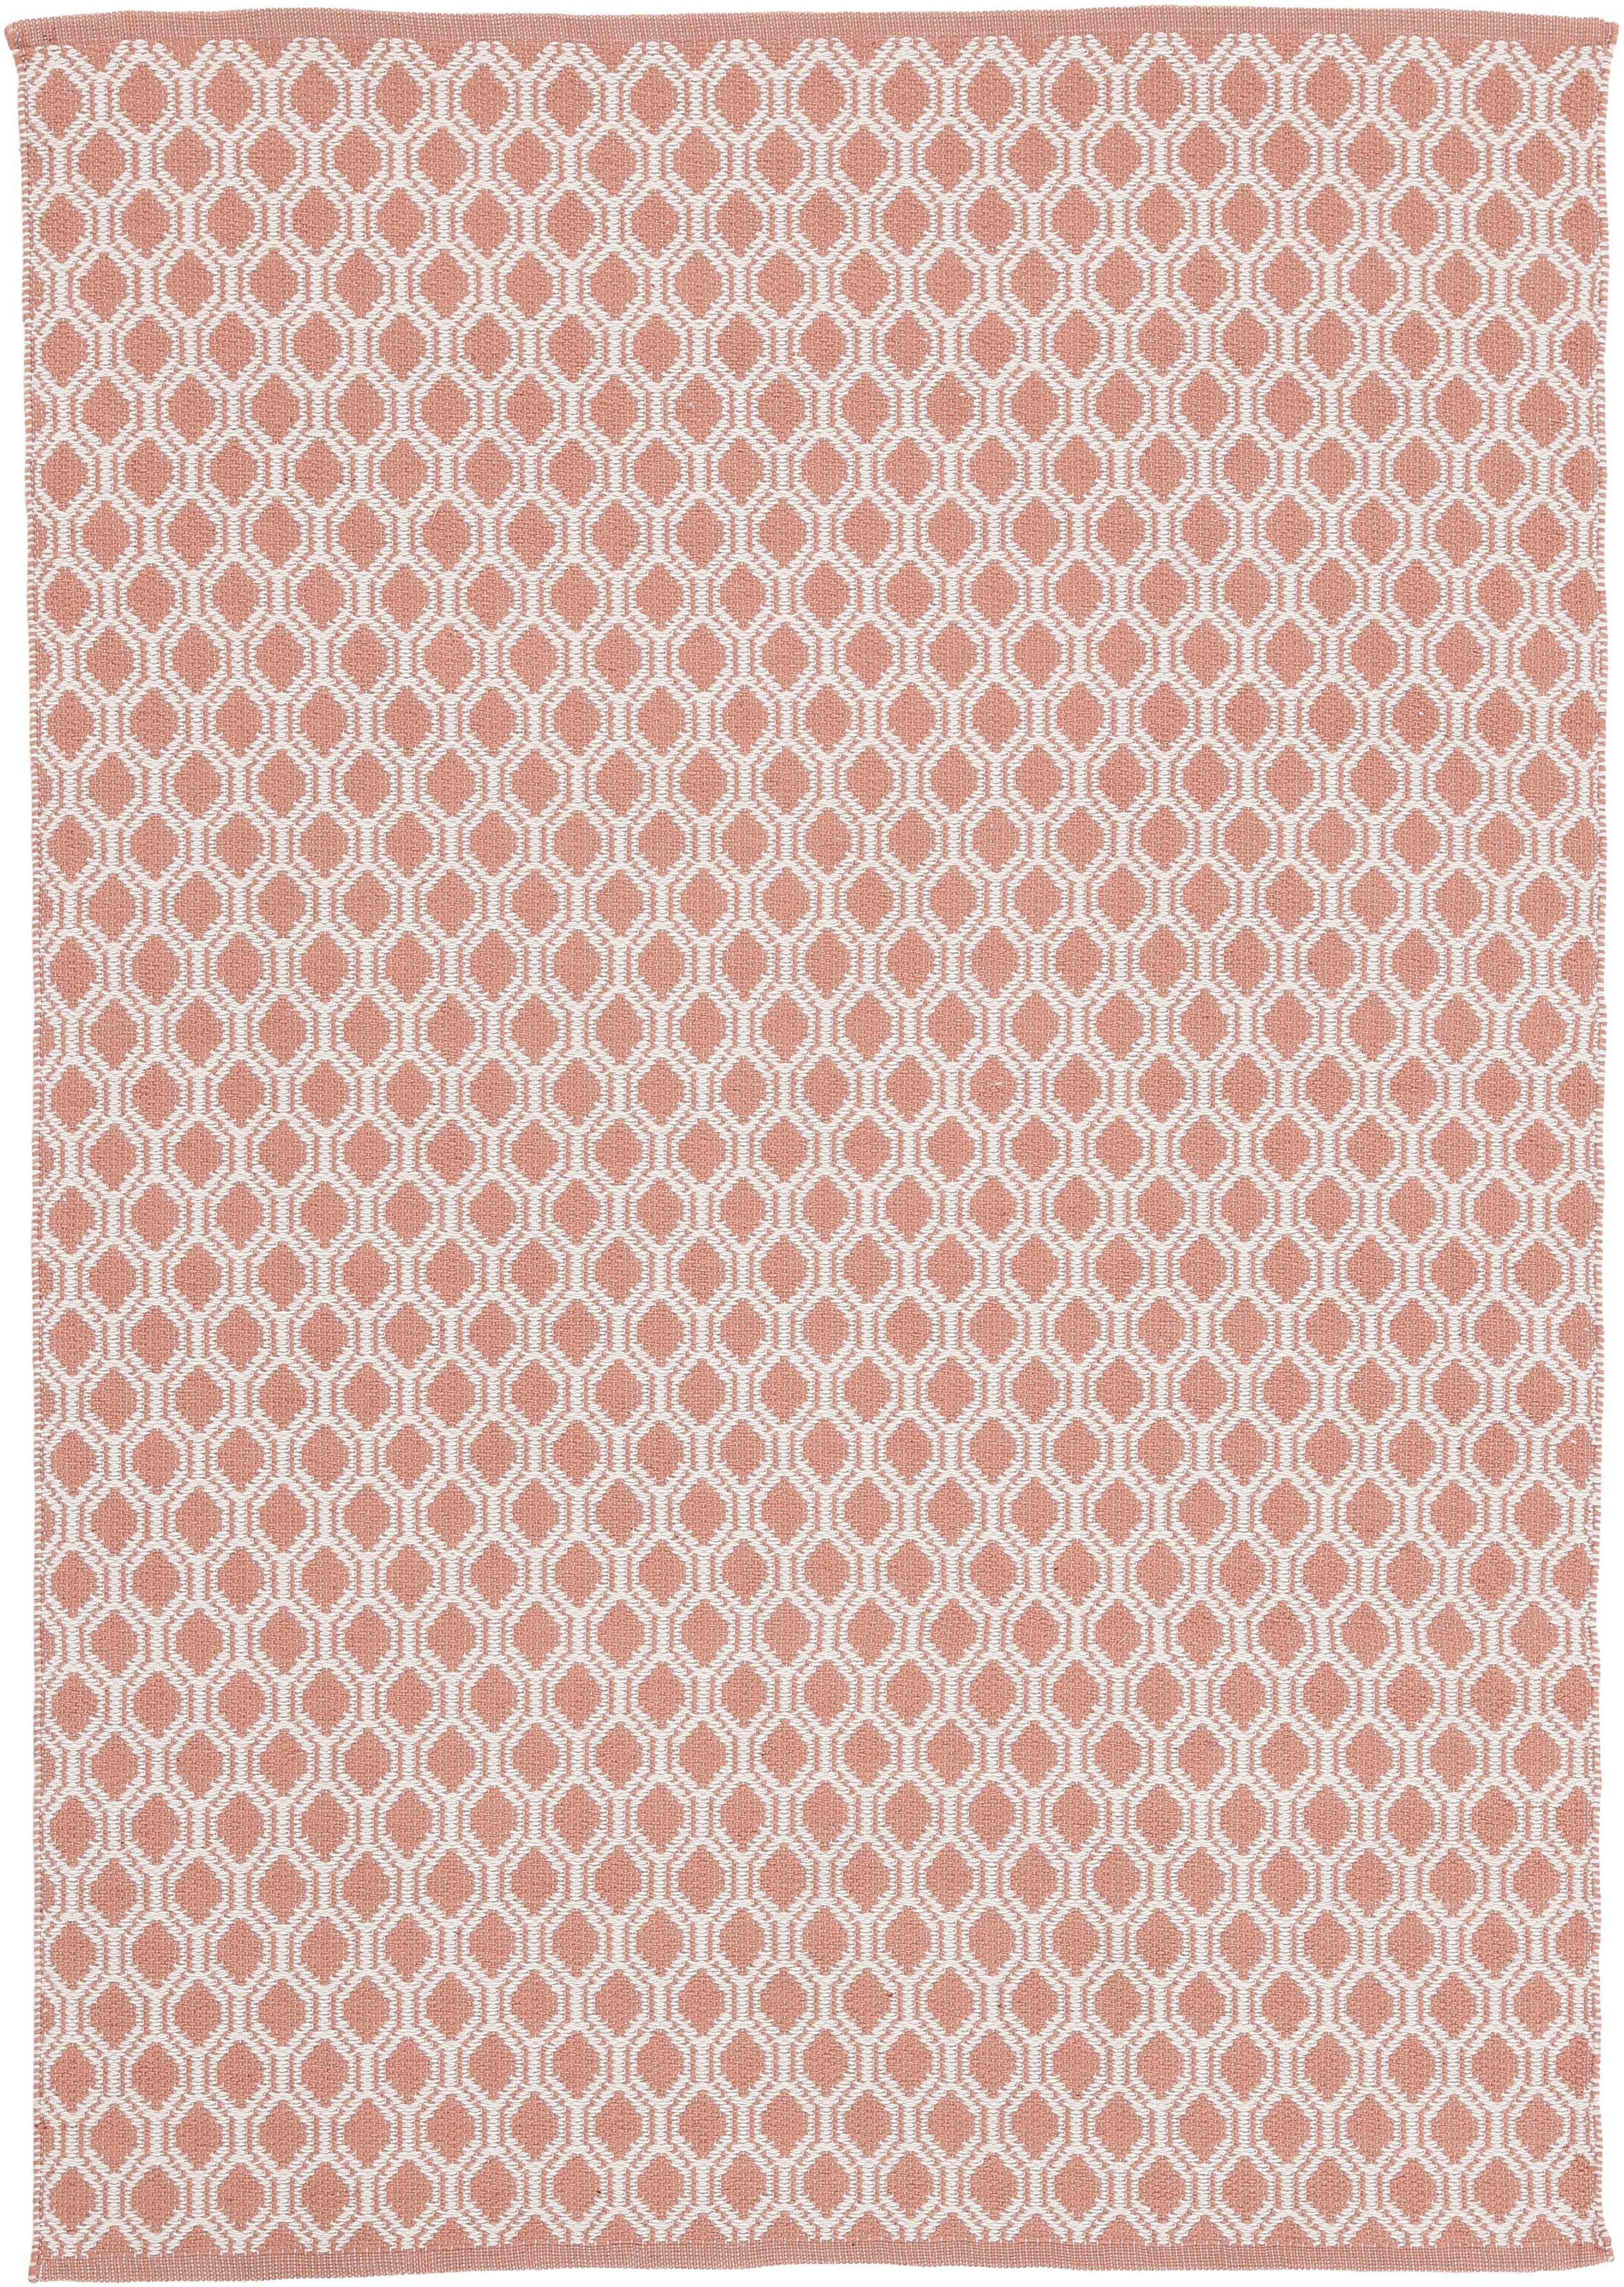 Sale im Gange! Teppich Frida 204, carpetfine, rechteckig, 100% recyceltem 7 Höhe: Material mm, (PET), Sisal Optik Wendeteppich, Flachgewebe, rosa